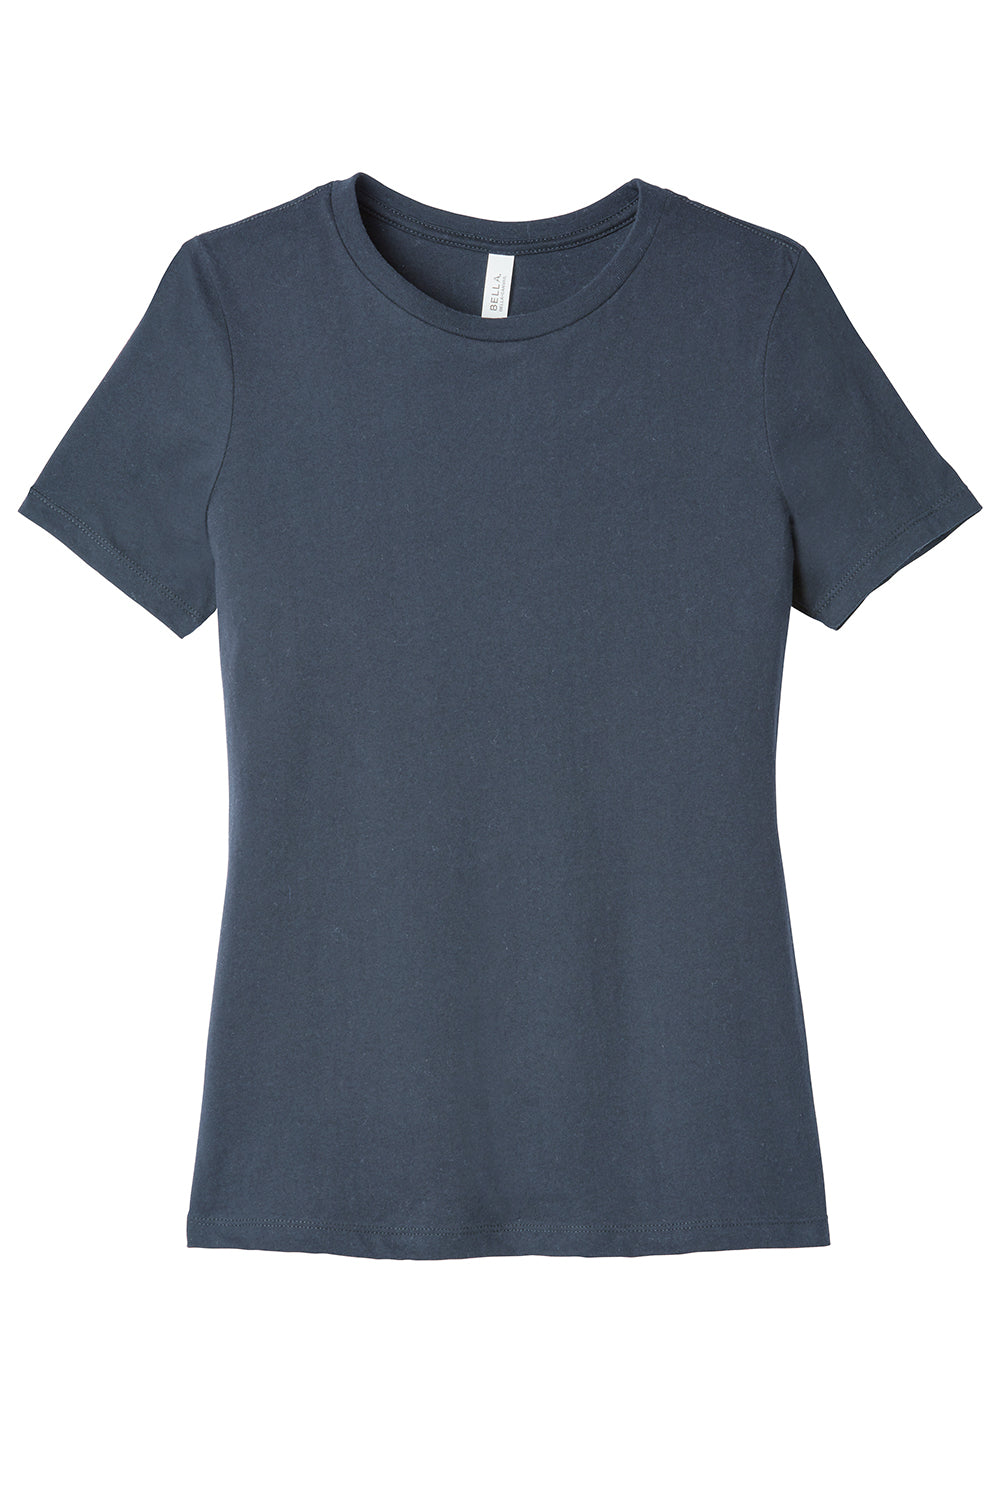 Bella + Canvas BC6400/B6400/6400 Womens Relaxed Jersey Short Sleeve Crewneck T-Shirt Dark Grey Flat Front